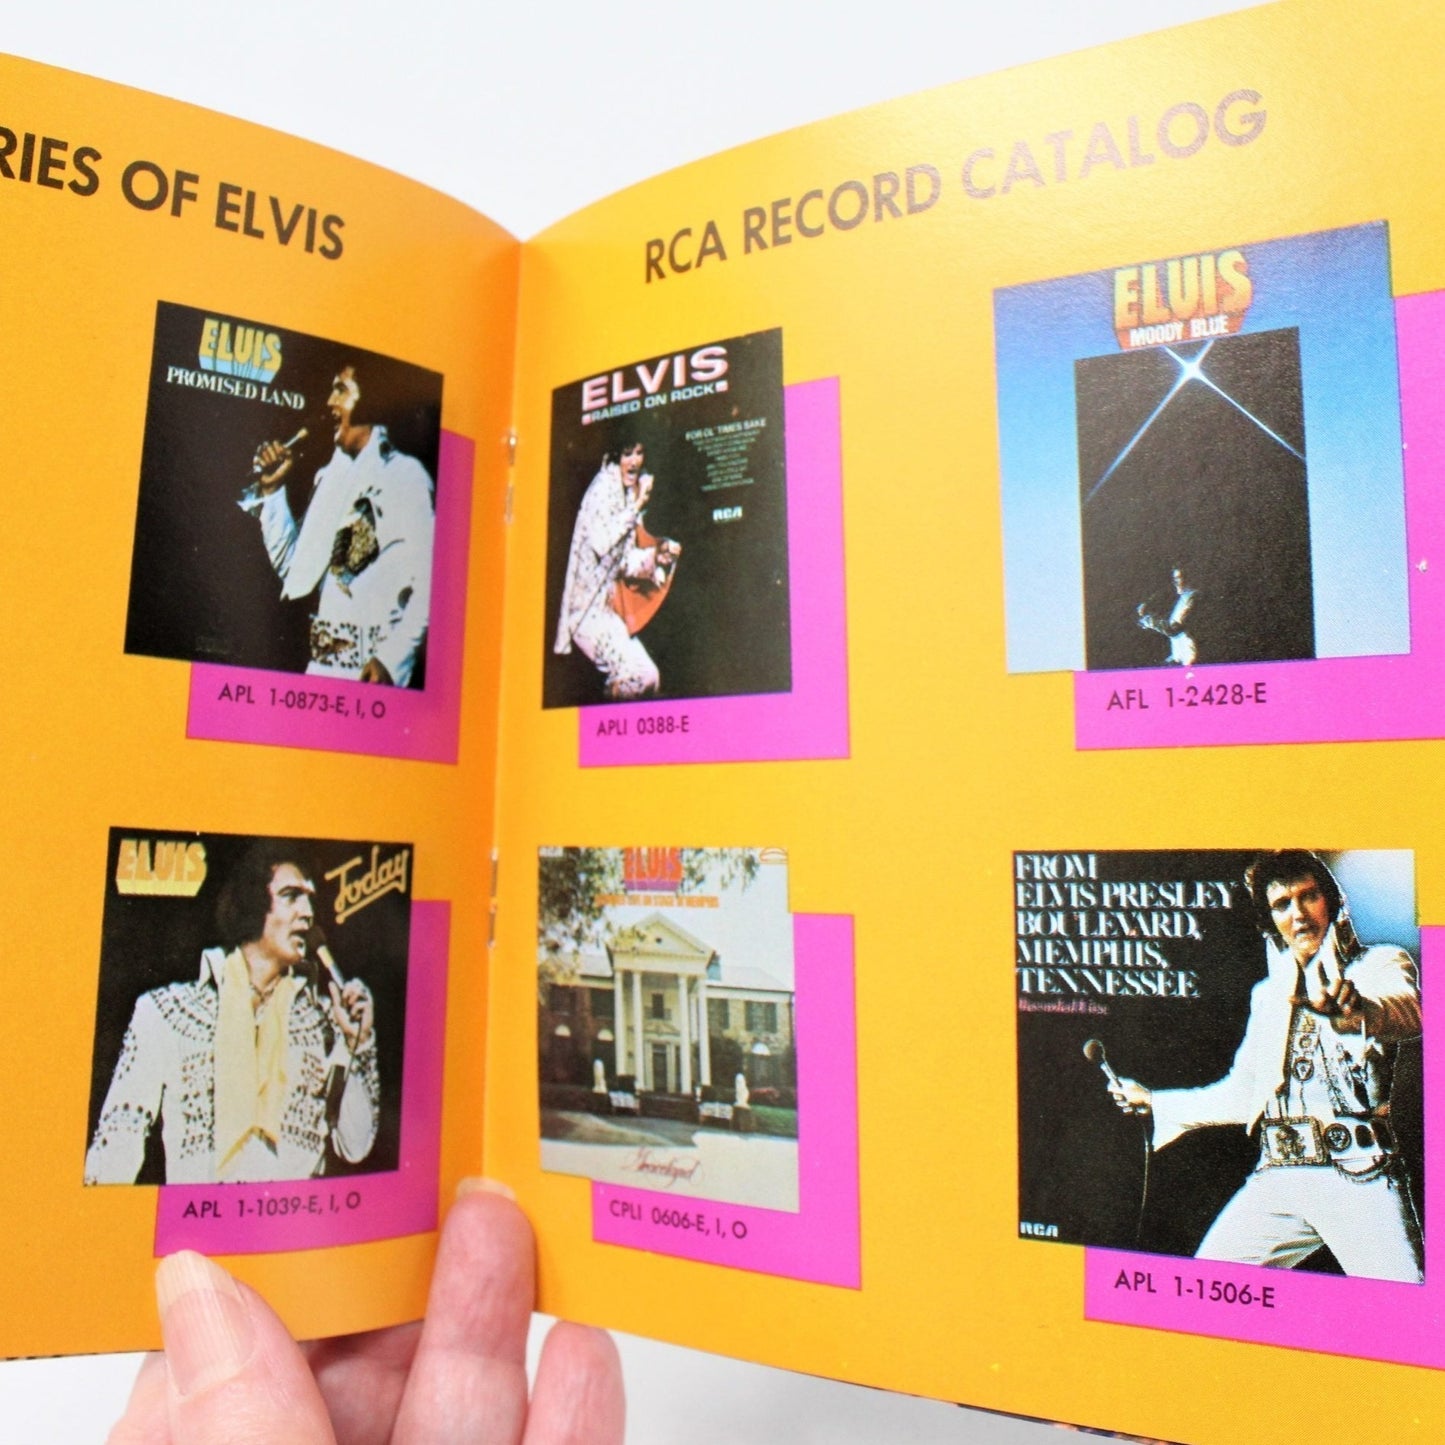 Brochure, Elvis Presley, Memories of Elvis Album Promotion, NOS, Vintage